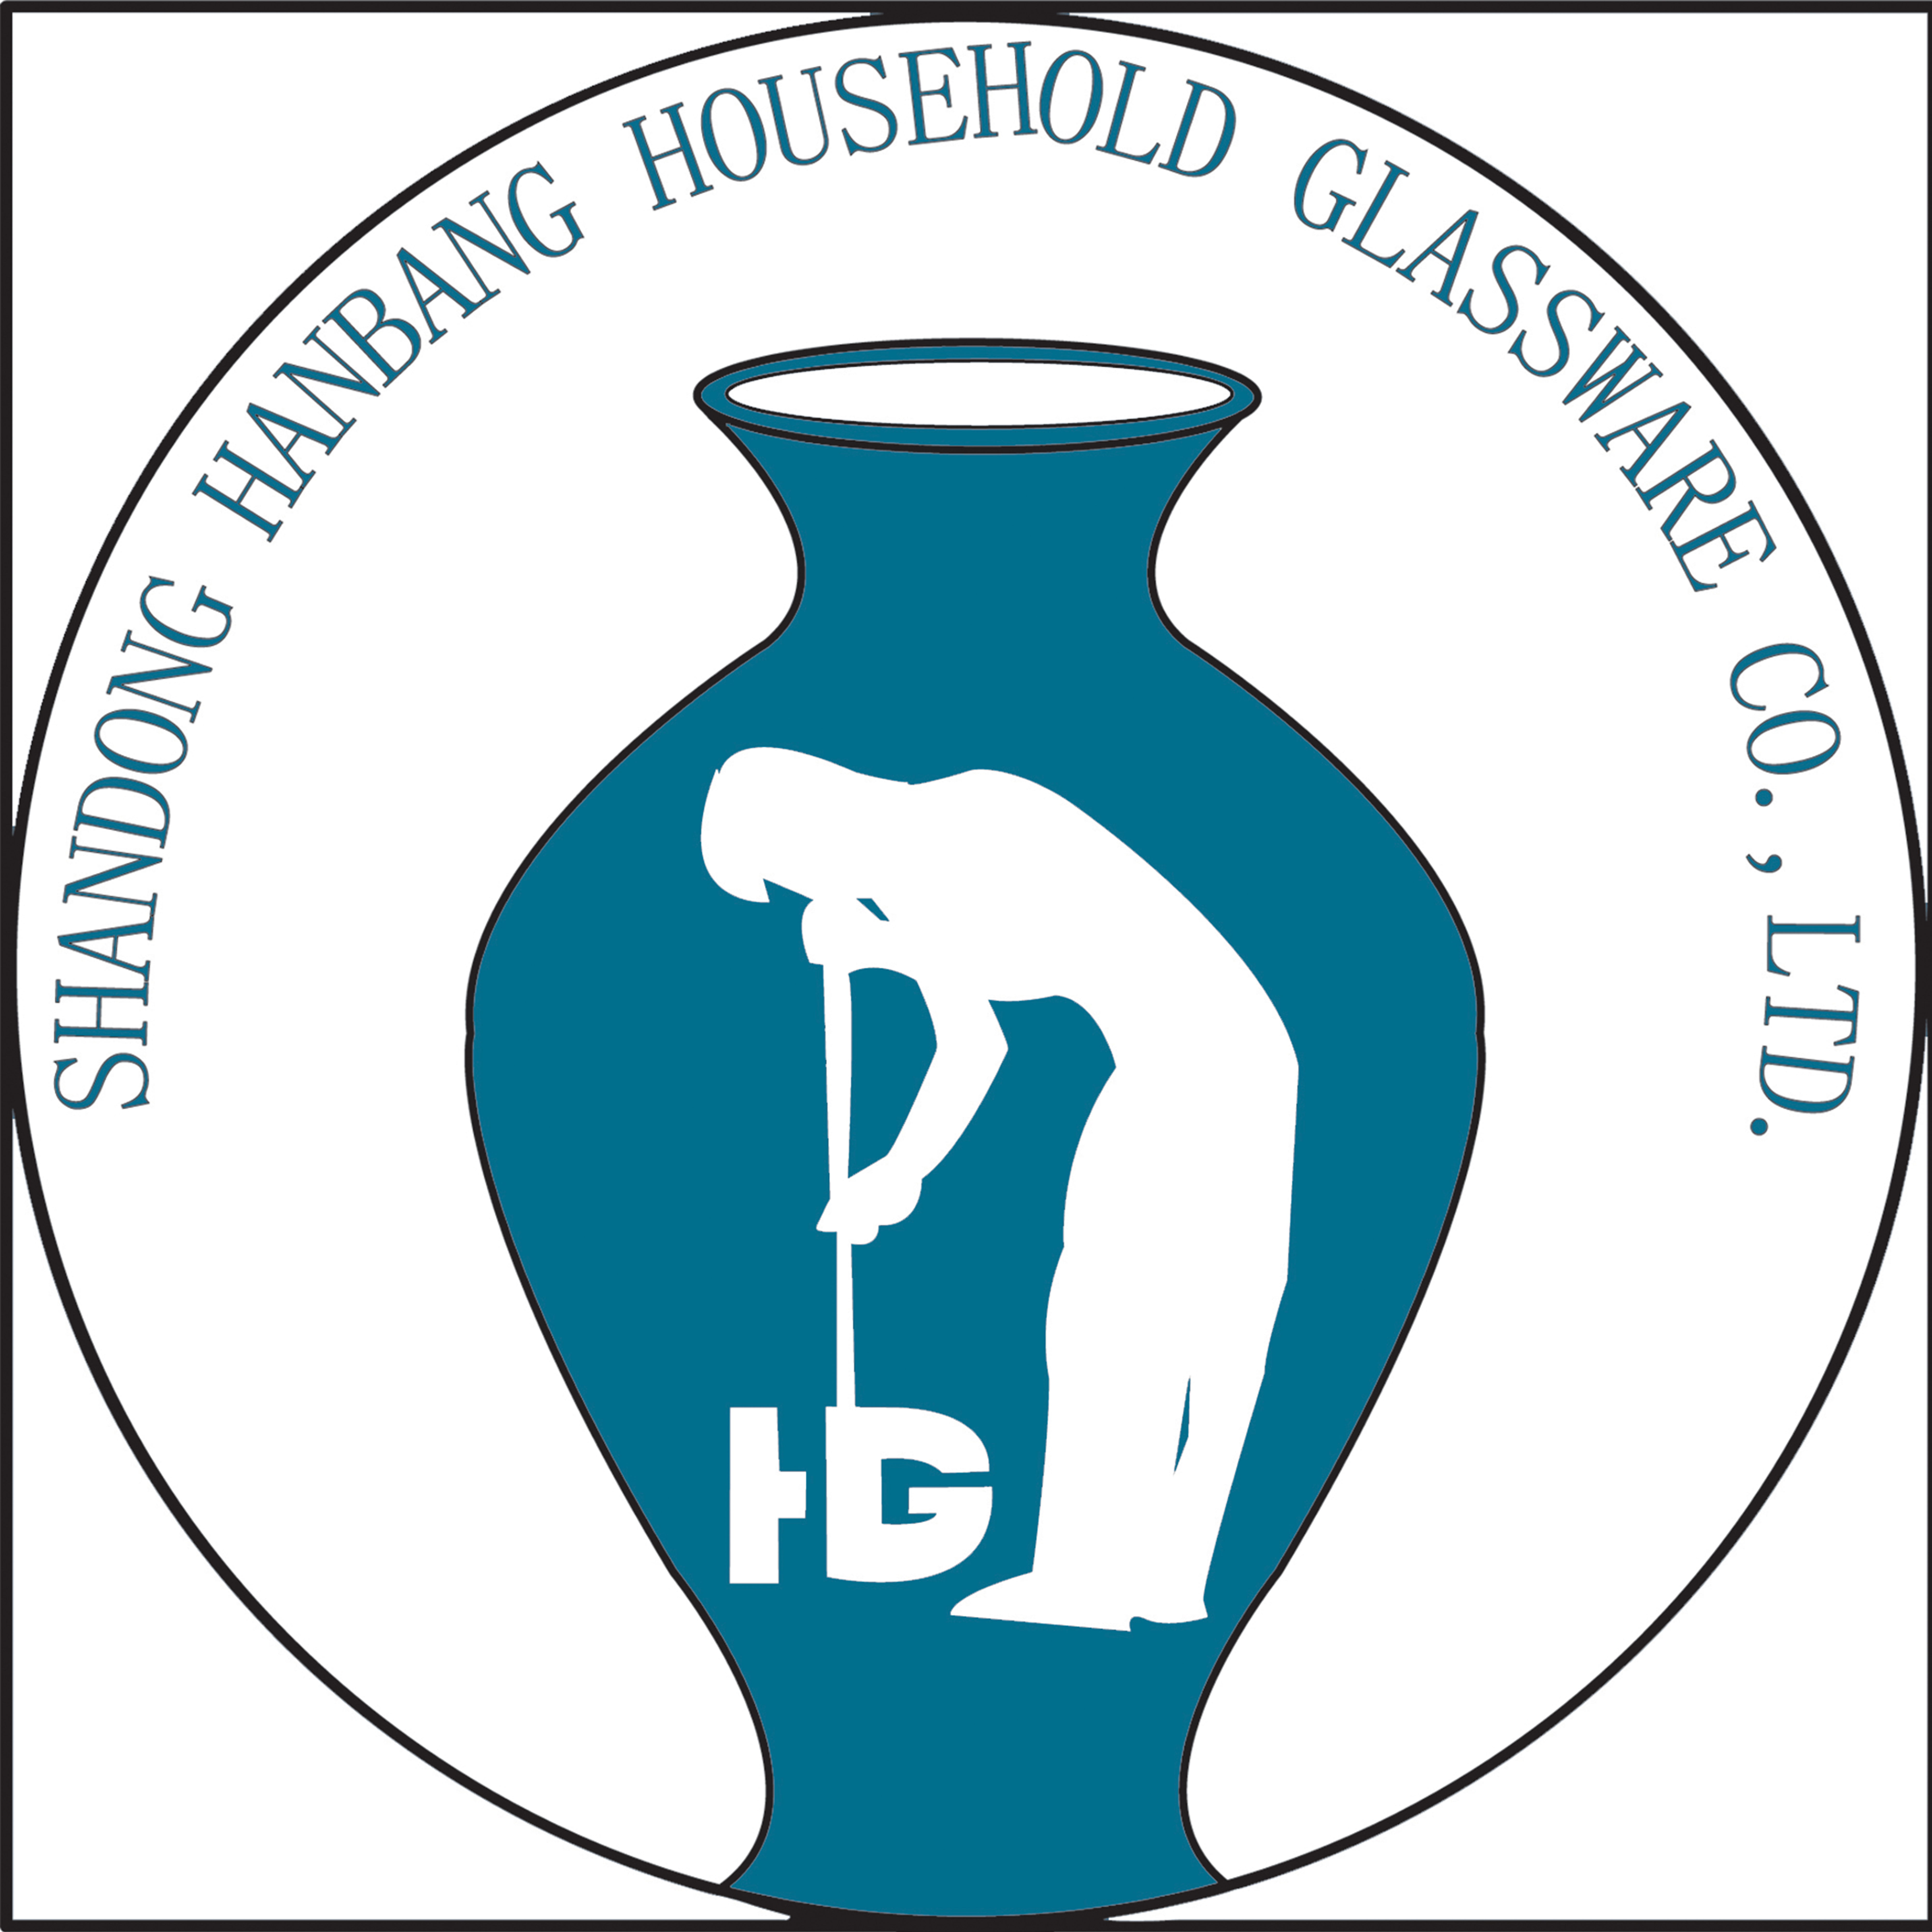 SHANDONG HANBANG HOUSEHOLD GLASSWARE CO., LTD.